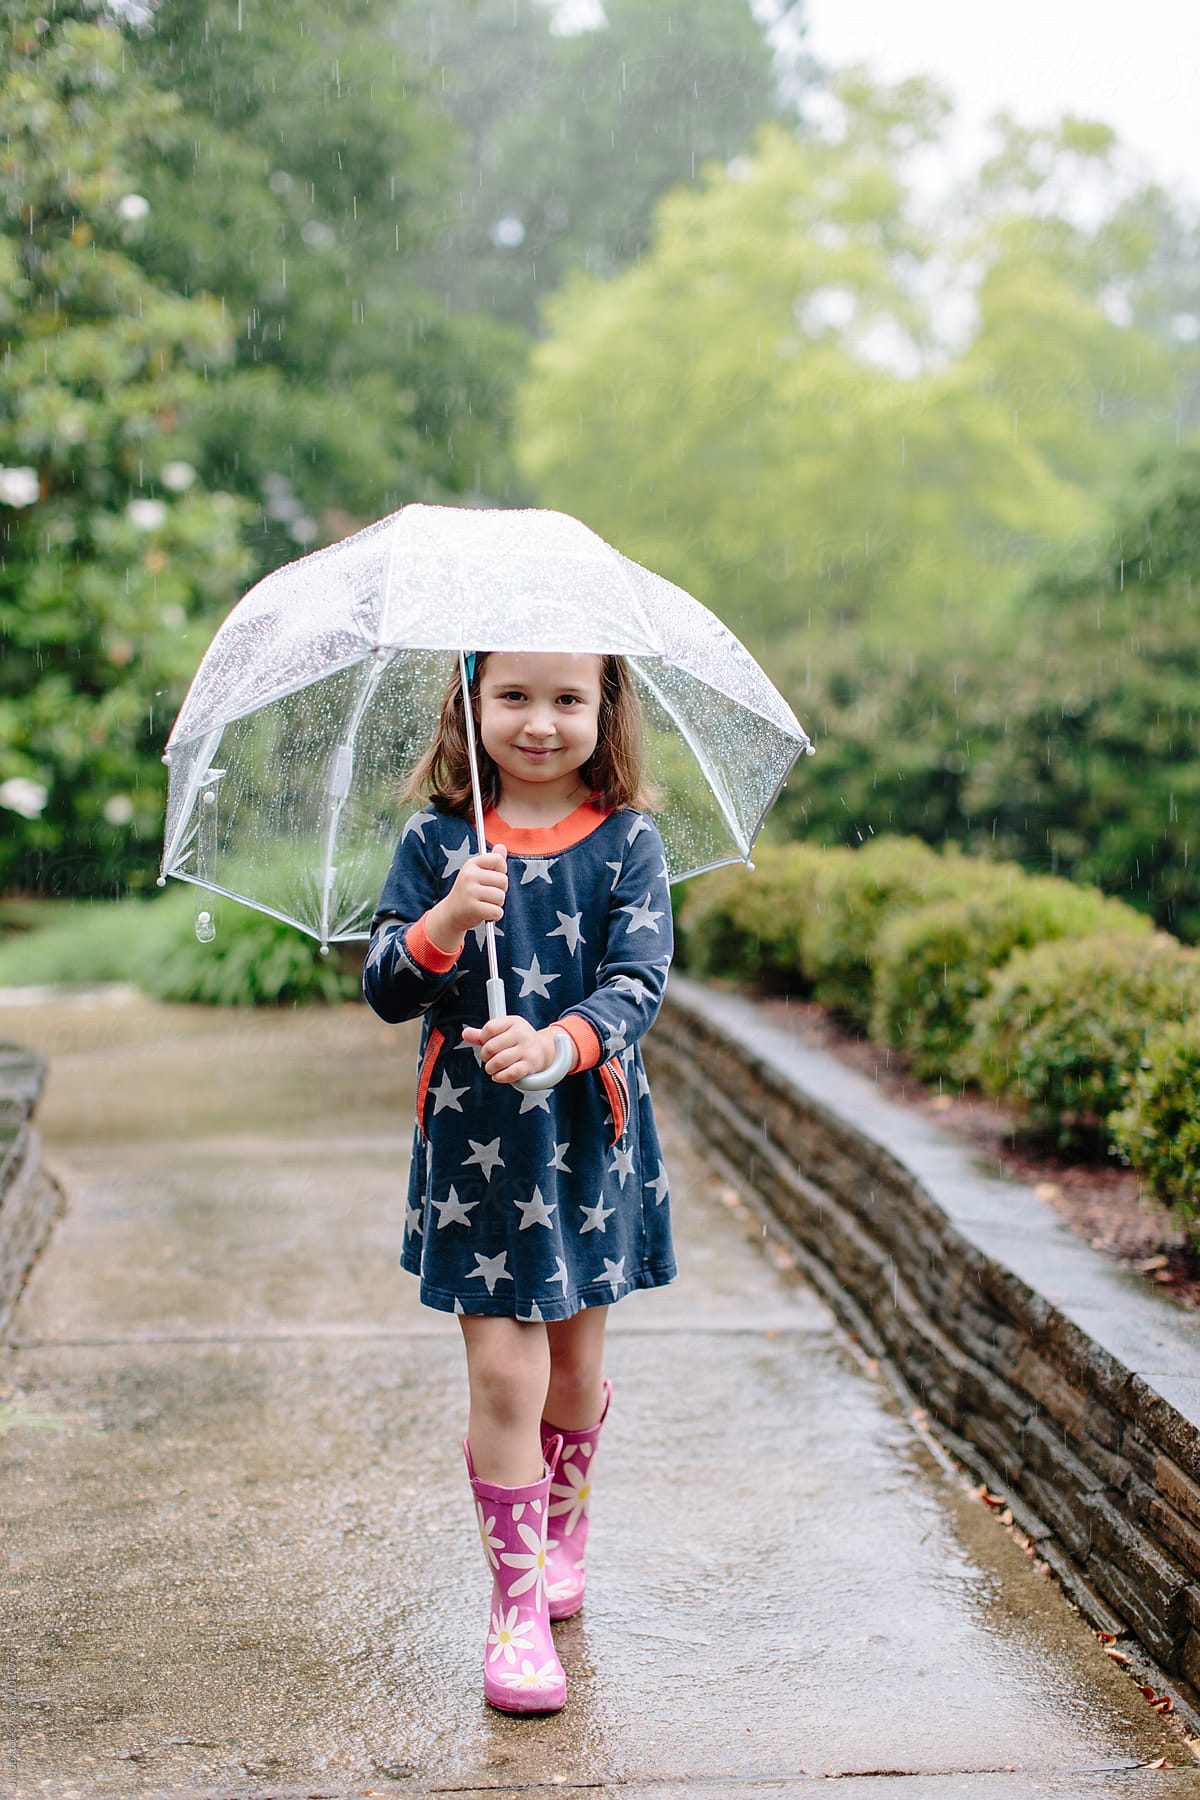 Cute young girl walking in the rain with an umbrella